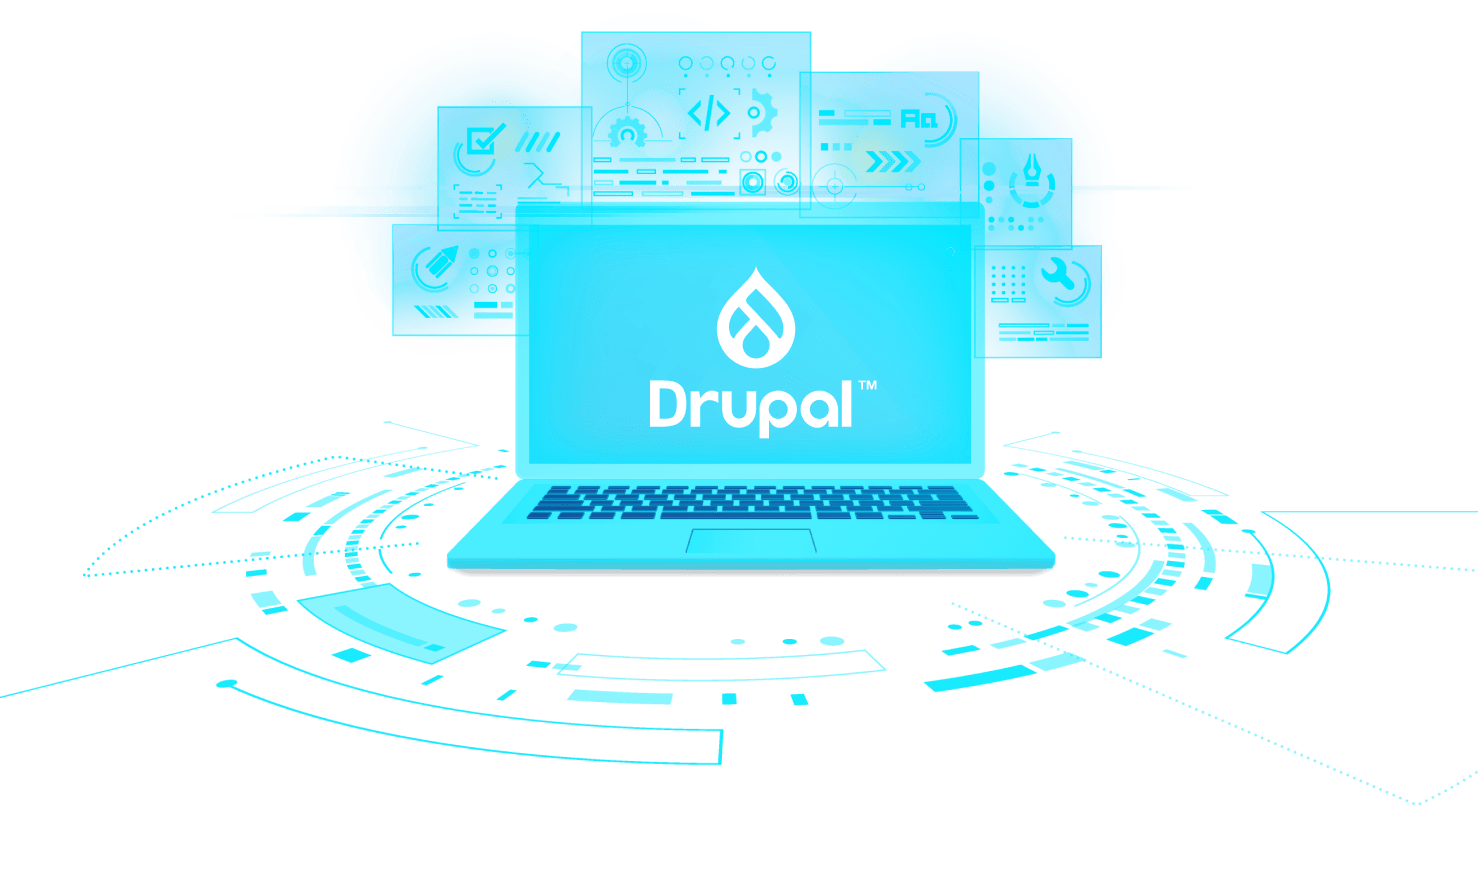 Drupal agency laptop image